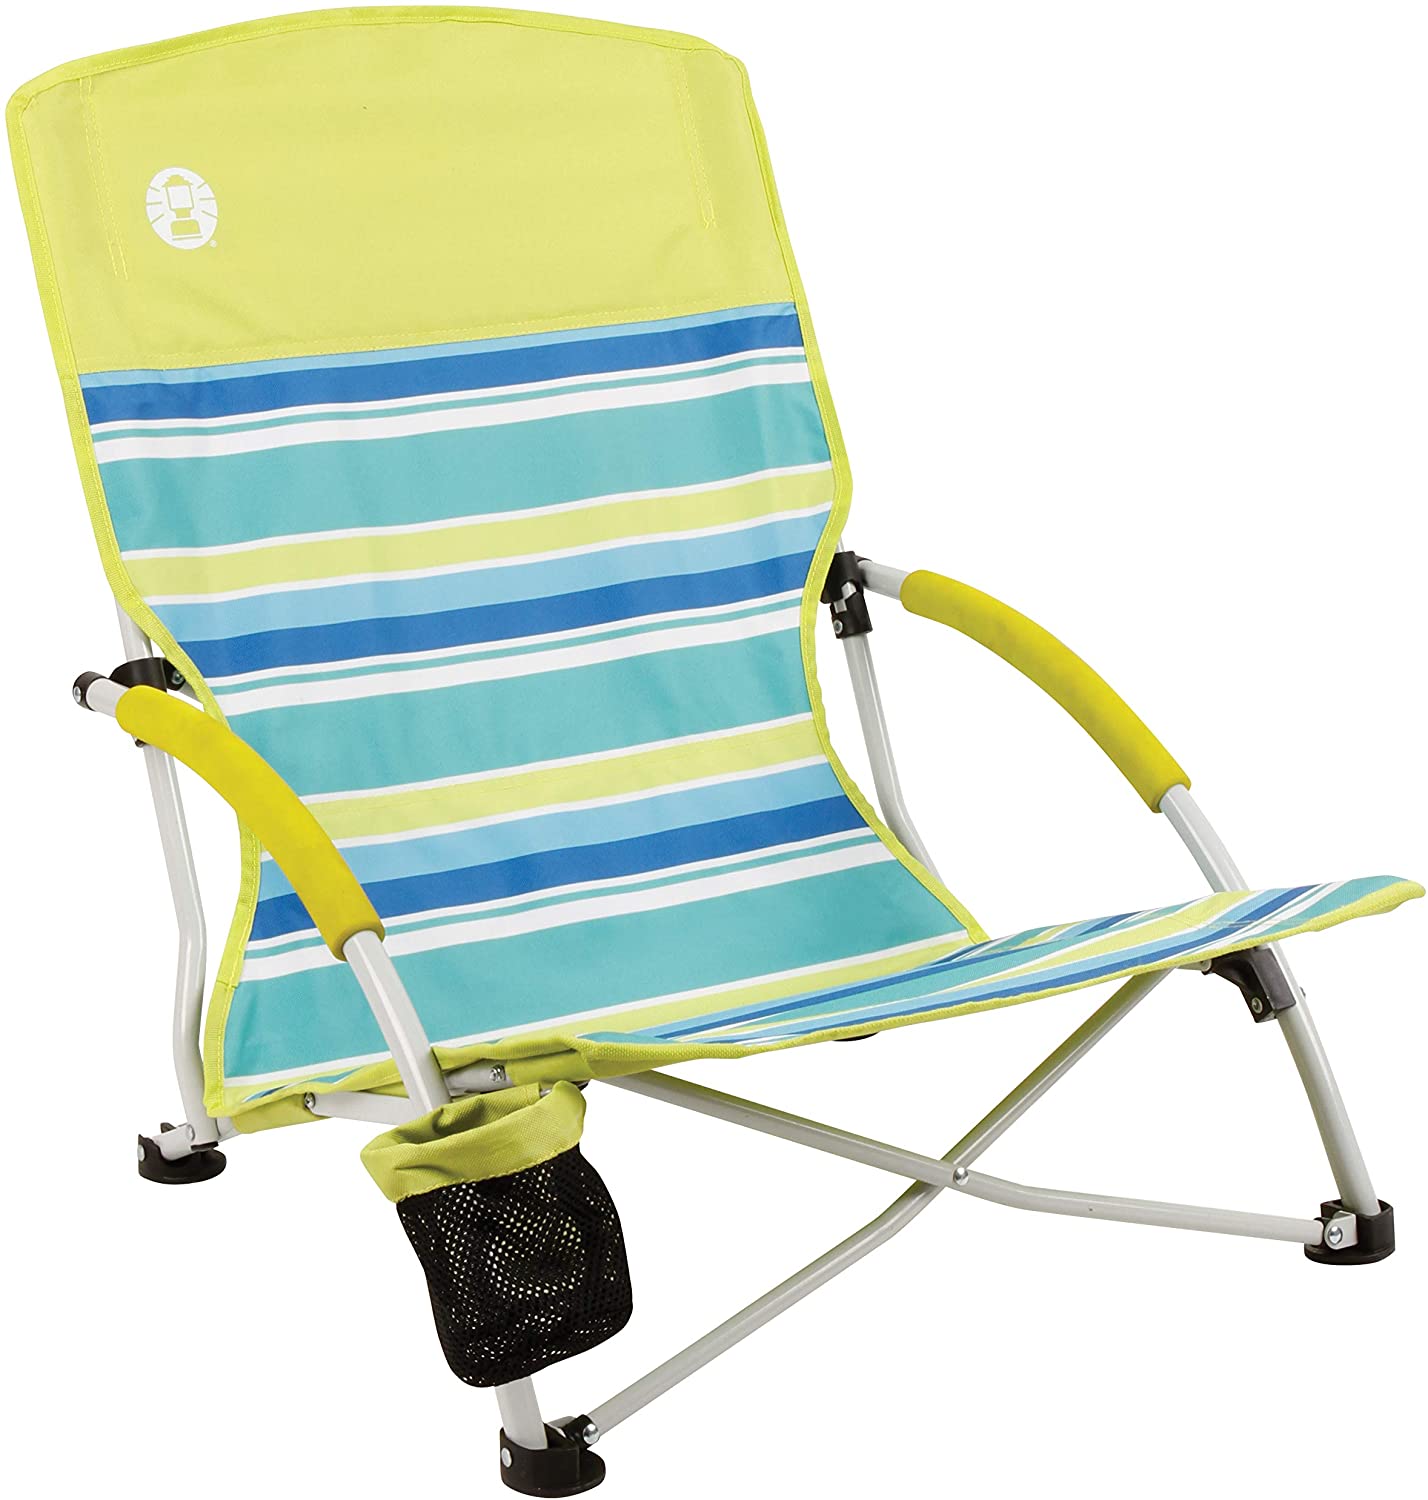 Coleman Low-Ground Beach Chair